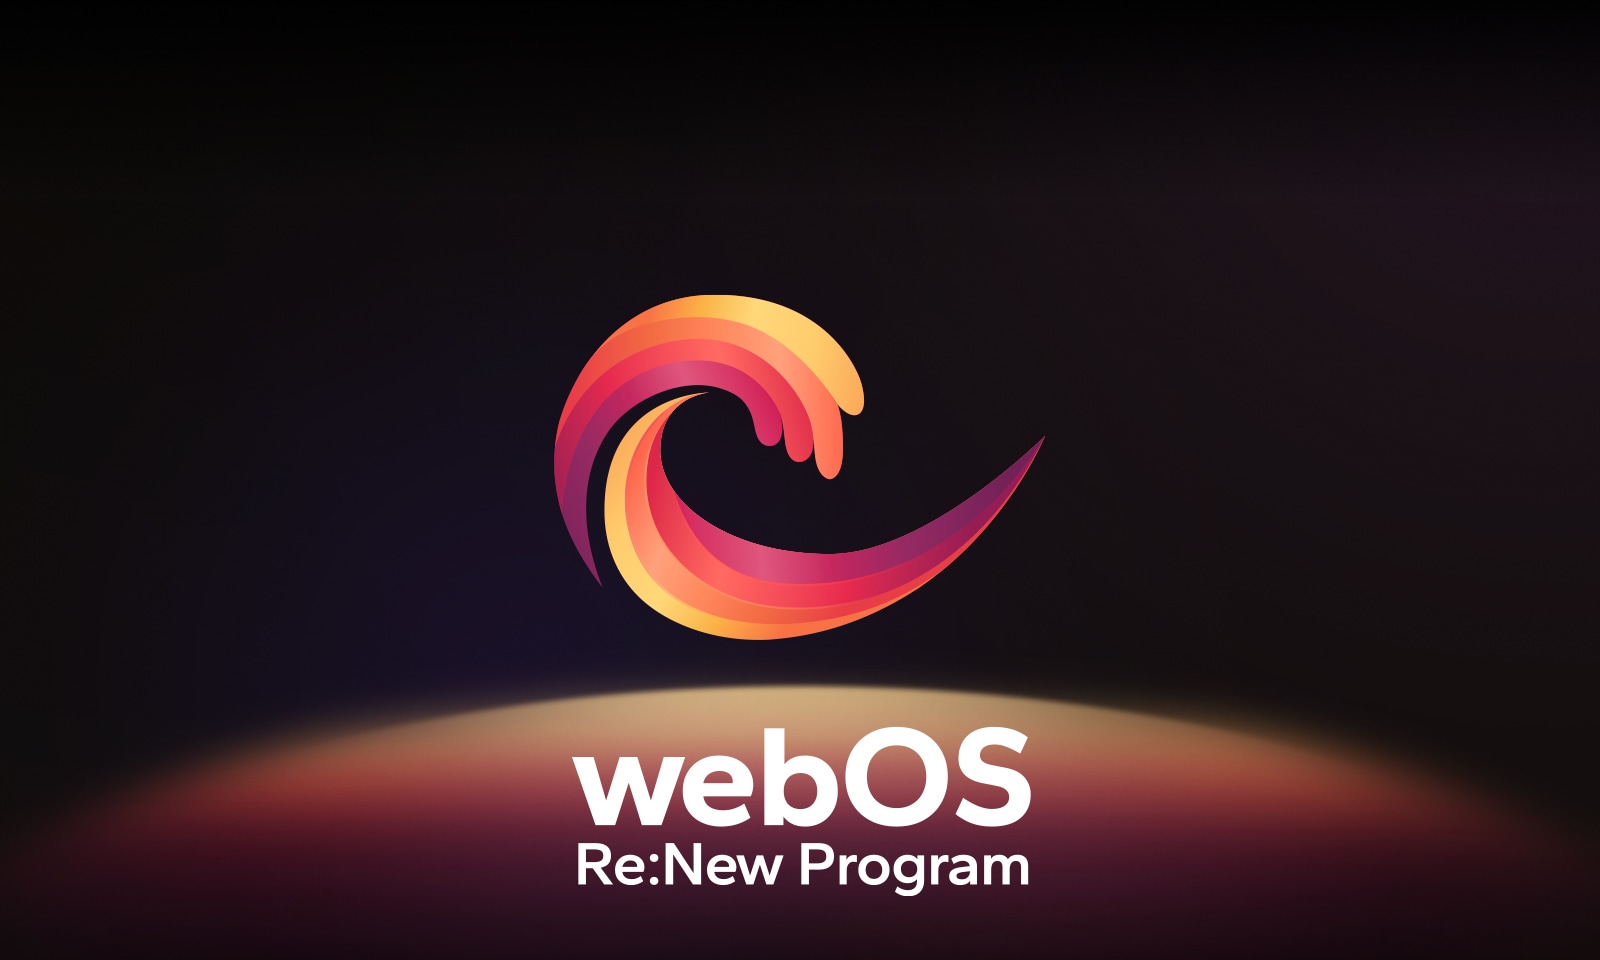 webOS 標誌浮停在黑色背景中央，而下方的空間以紅色、橘色和黃色標誌顏色亮起。「webOS Re:New Program」文字在標誌下方。